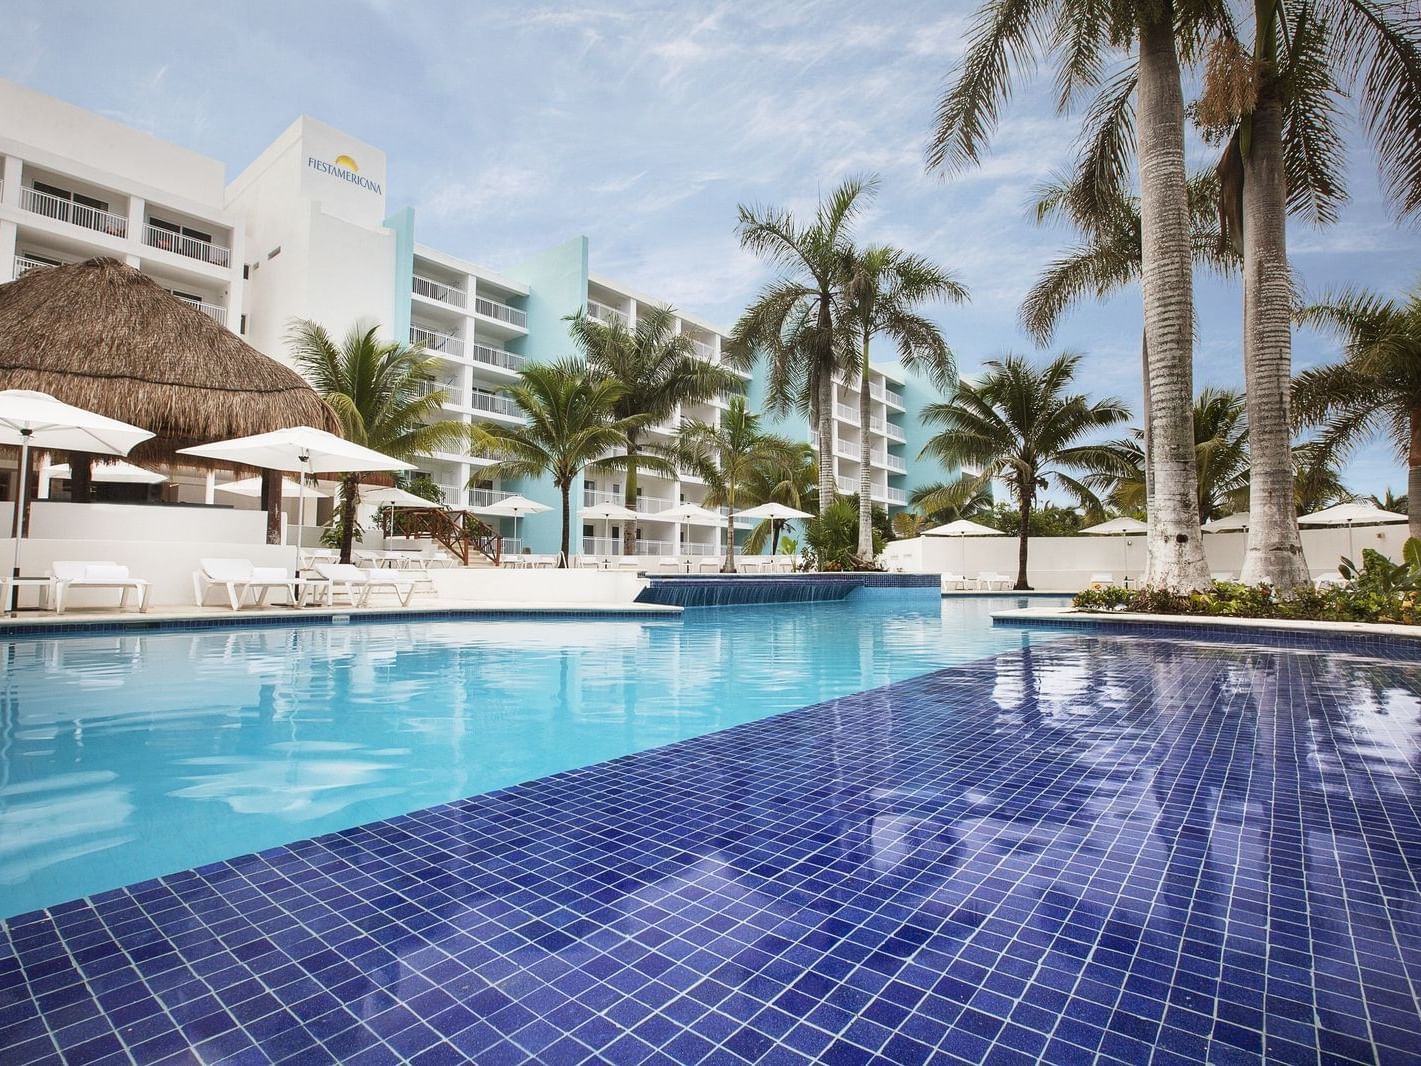 Outdoor pool & palm trees around it at La Colección Resorts